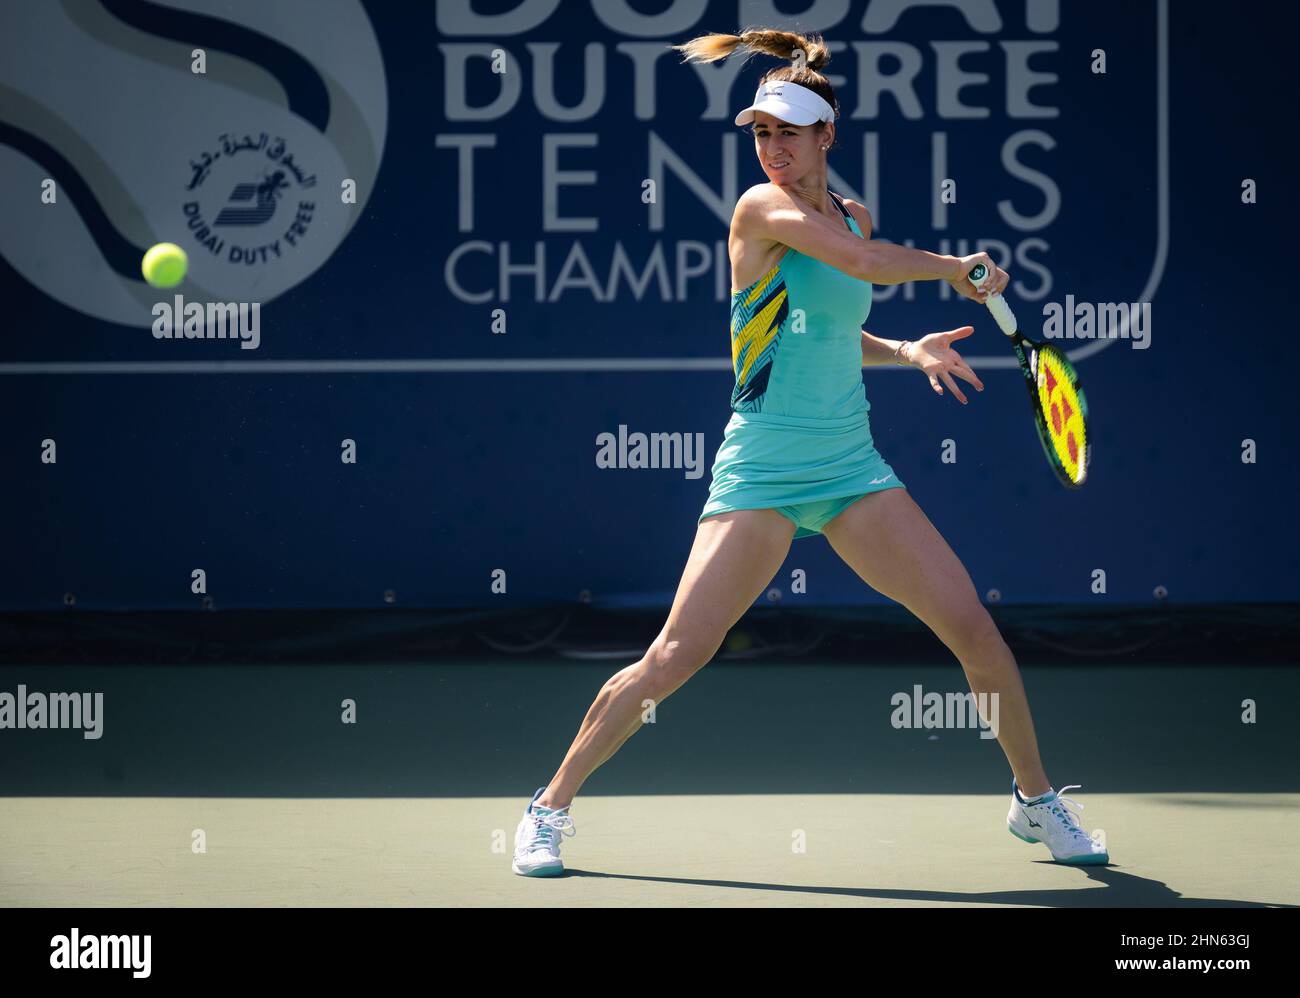 Anna Bondar Tennis High Resolution Stock Photography and Images - Alamy